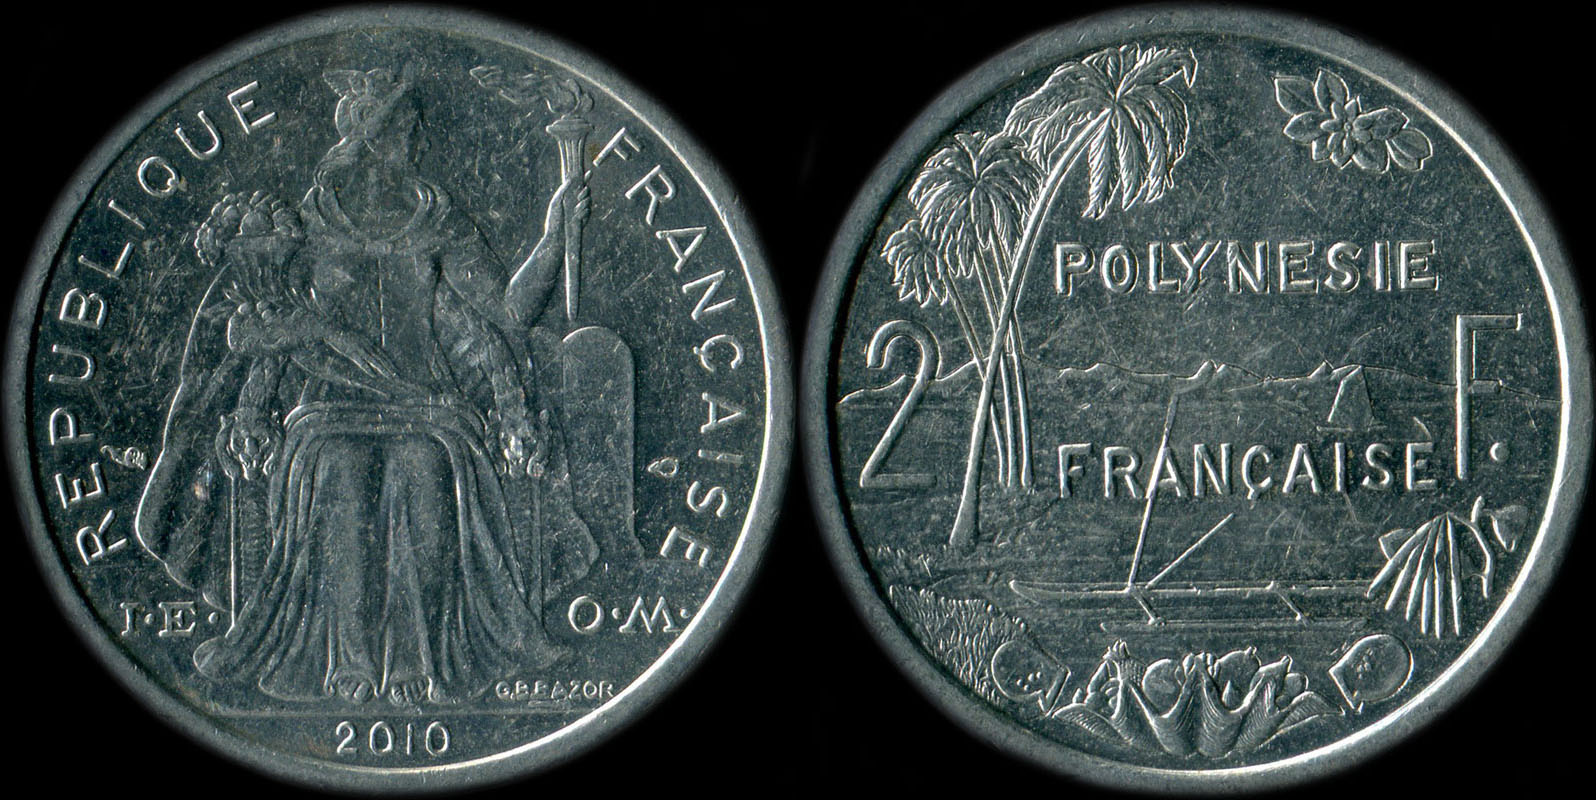 Pice 2 francs 2010  - I.E.O.M. Polynsie franaise